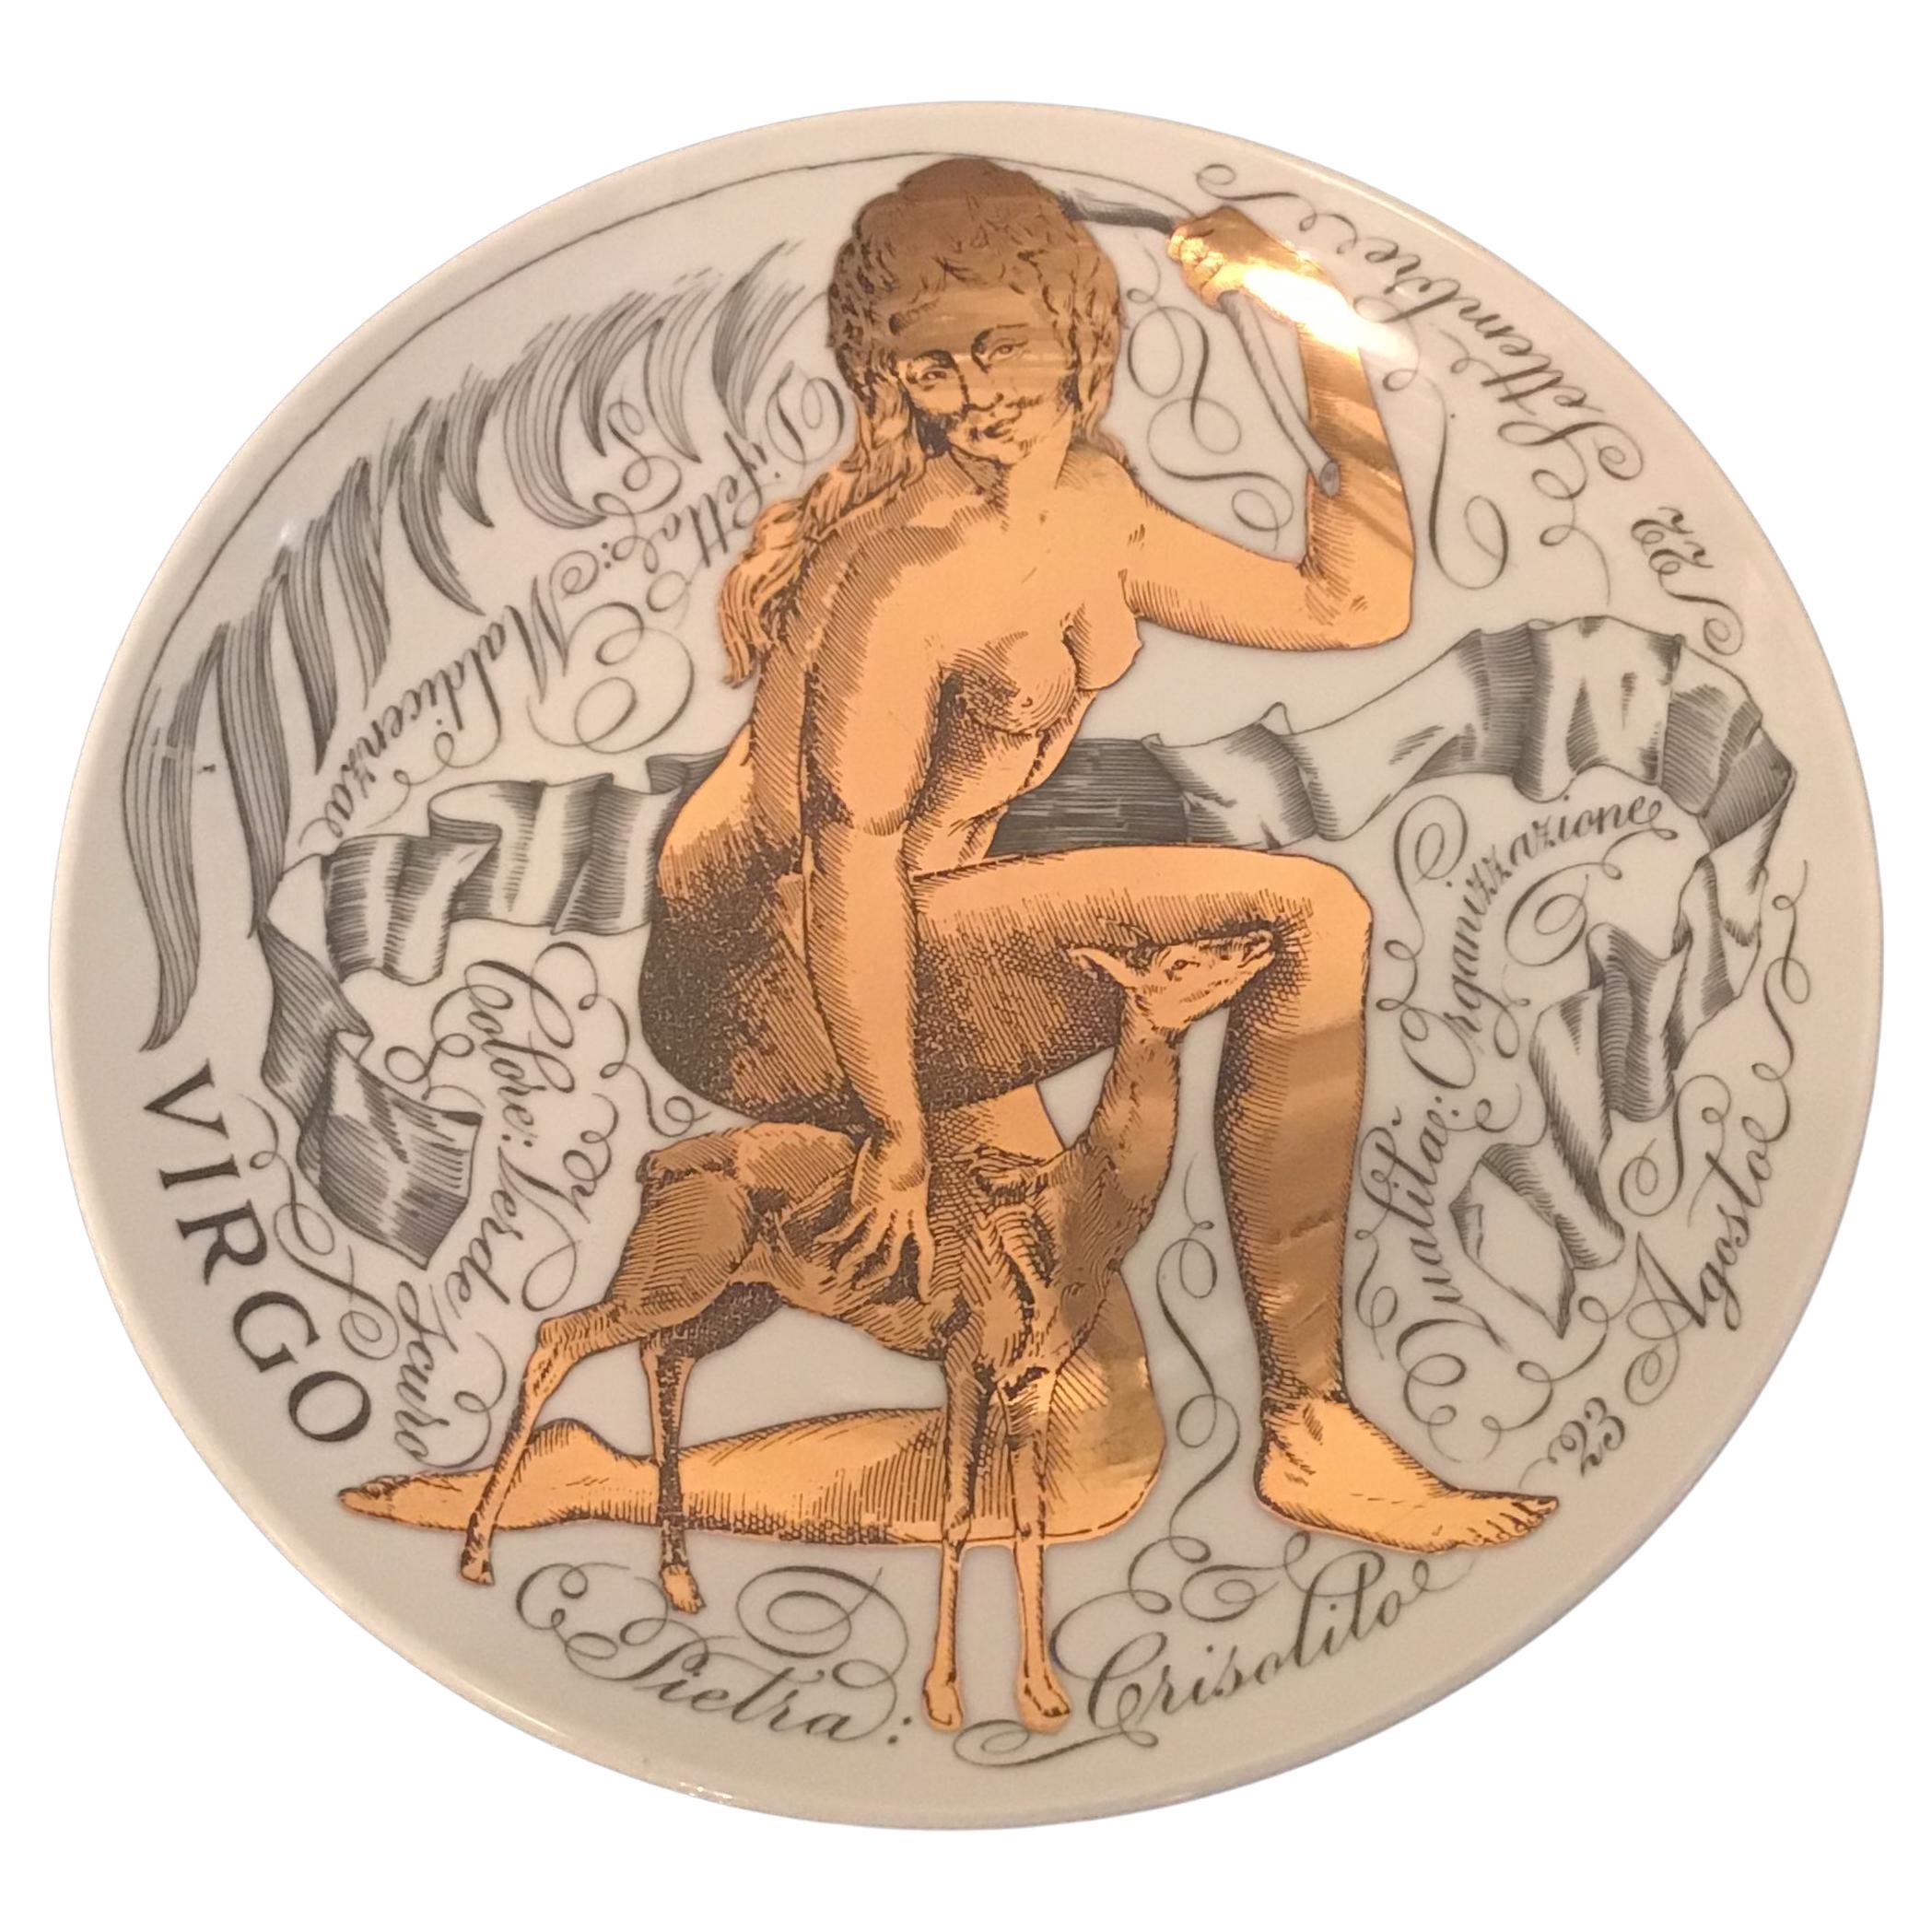 Piero Fornasetti “Virgo” Plate Porcelain Gold, 1969, Italy